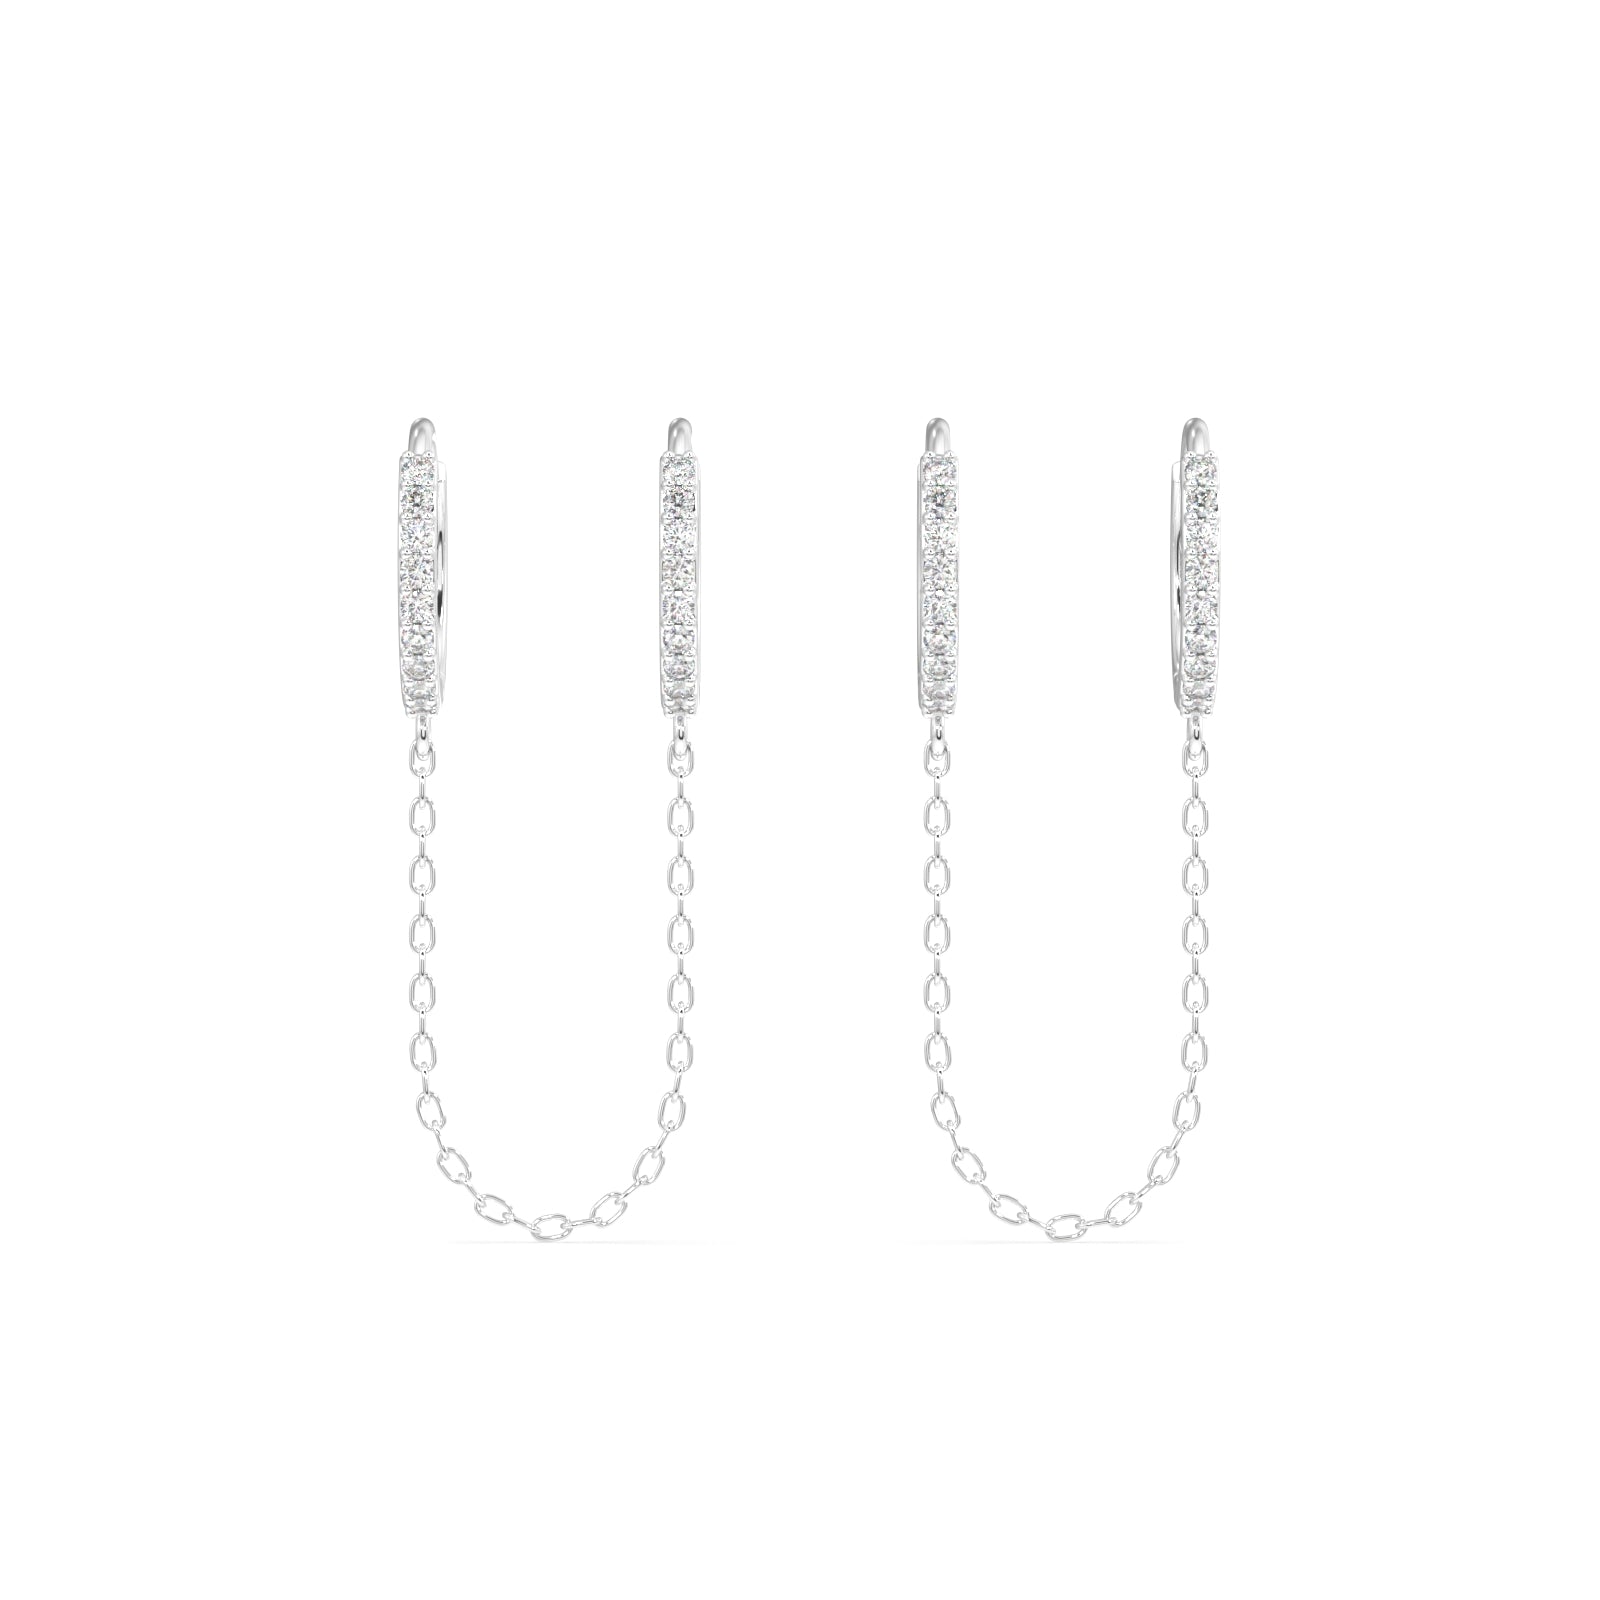 Connecting chain zircon hoops - pair